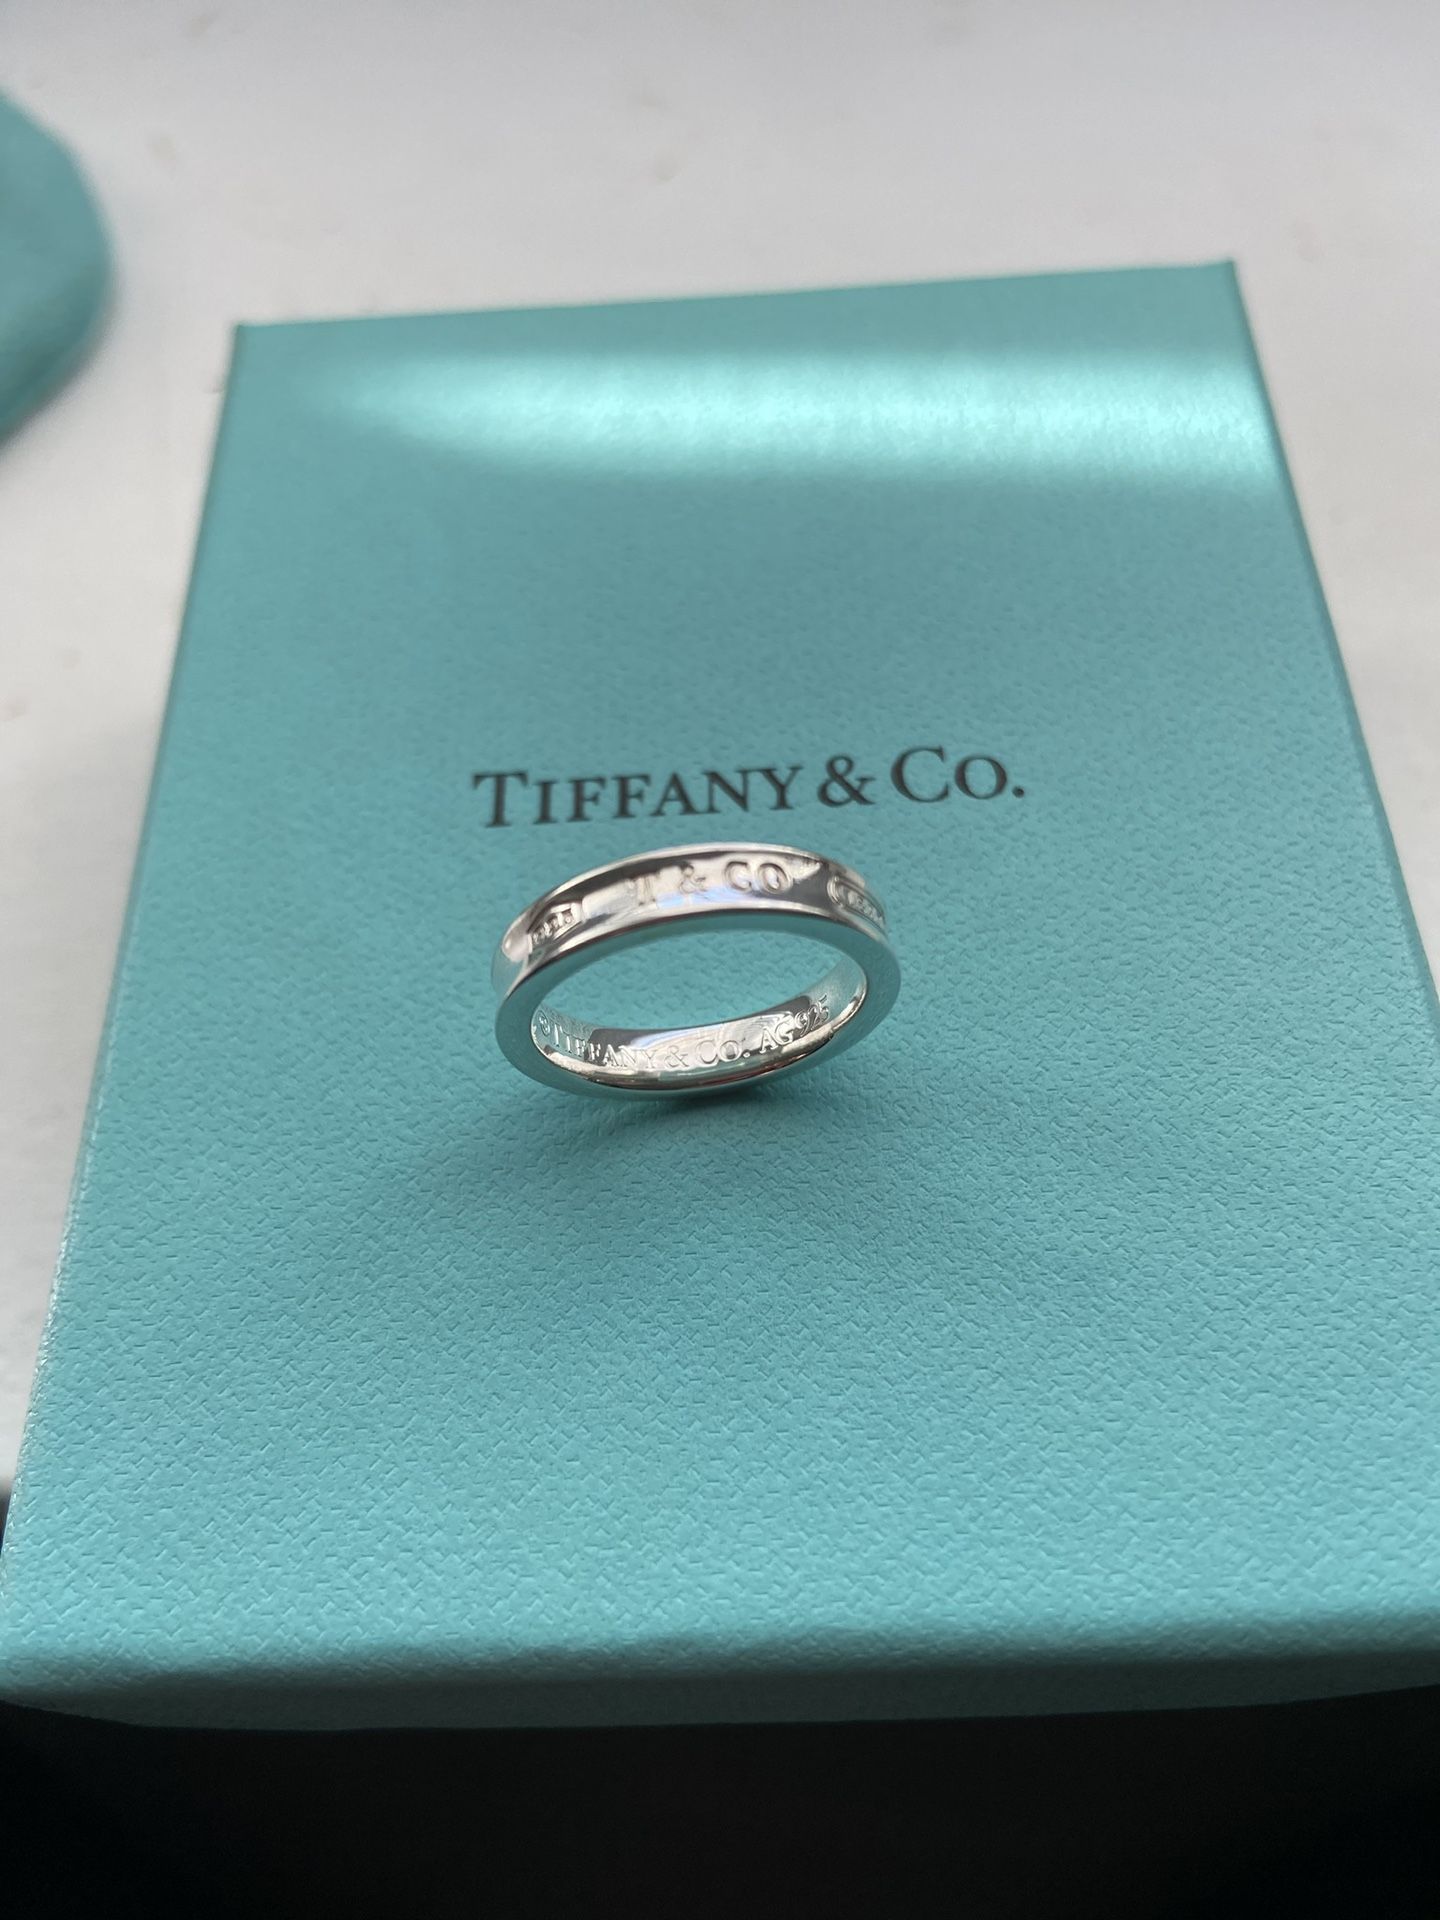 Tiffany & Co. 1837 Narrow Basic Ring Sterling Silver